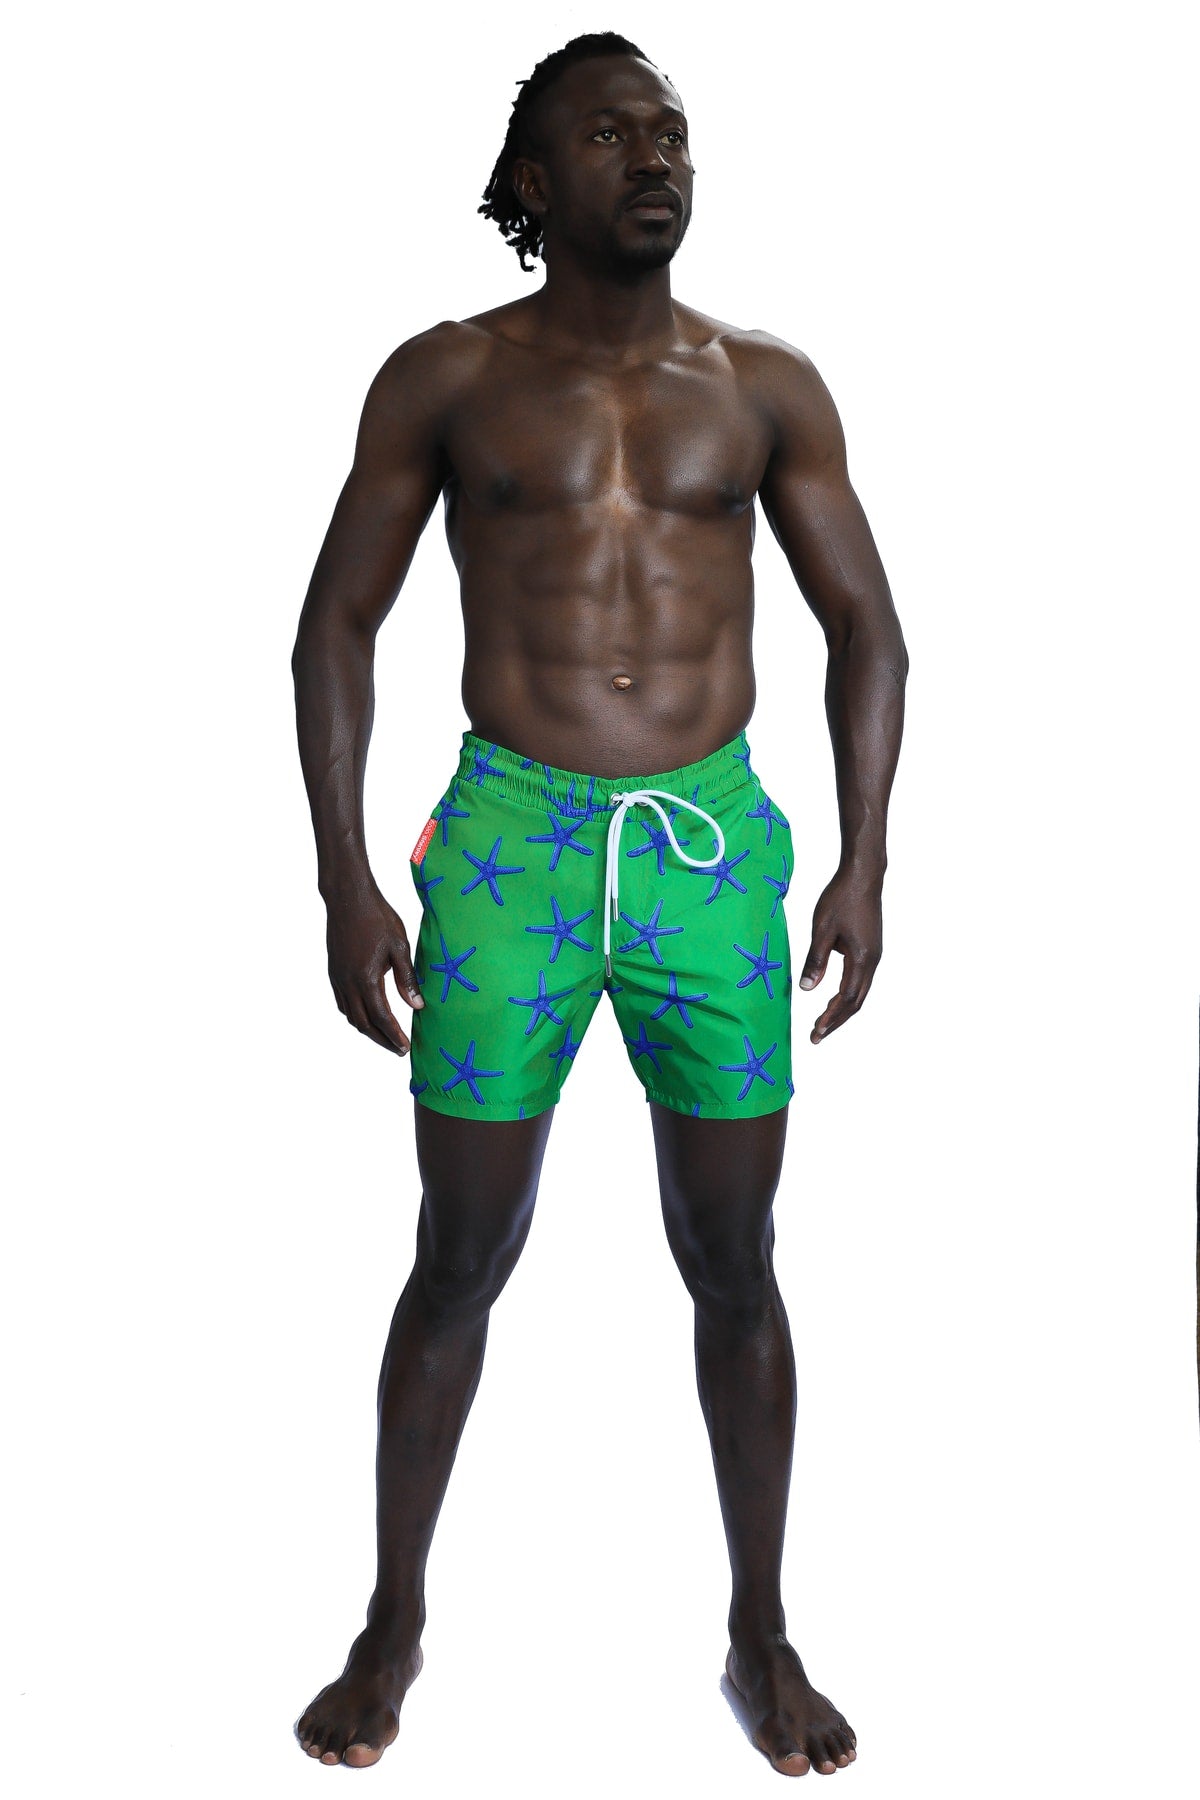 Men's Patterned Green Sea Shorts